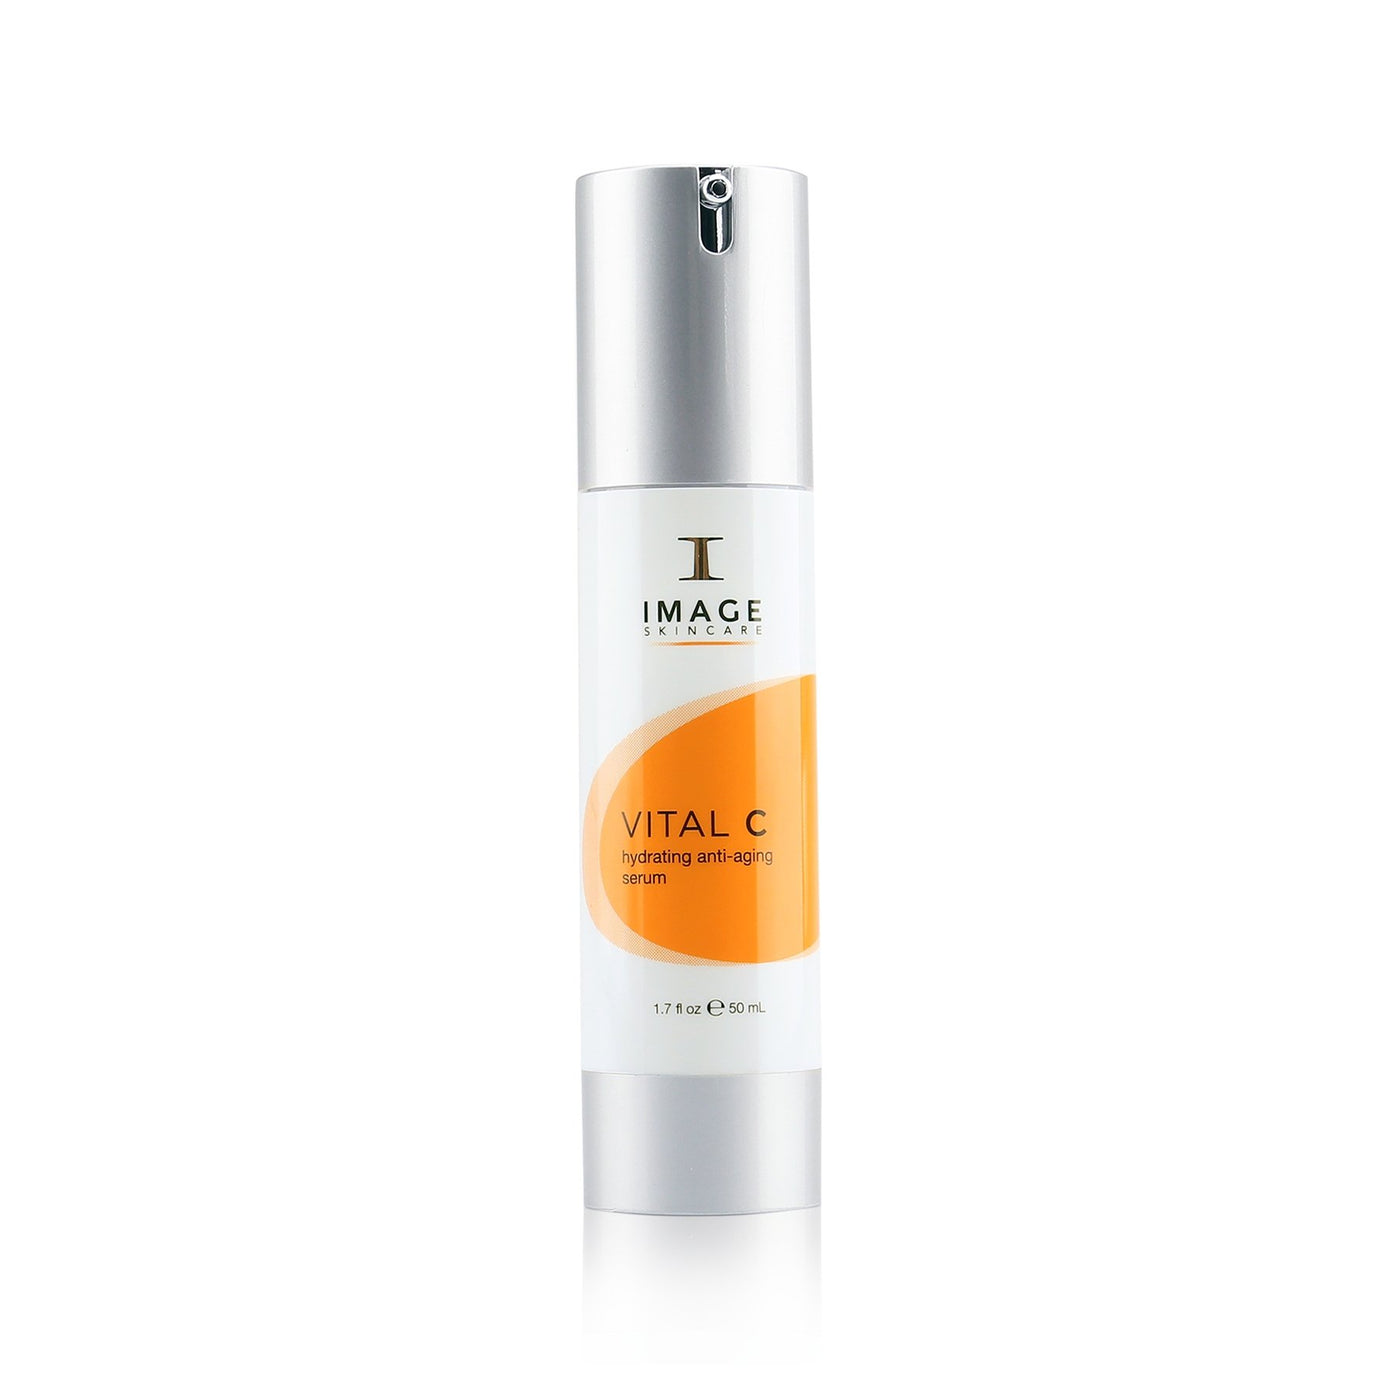 VITAL C hydrating anti-aging serum 1.7oz - The Skin Beauty Shoppe